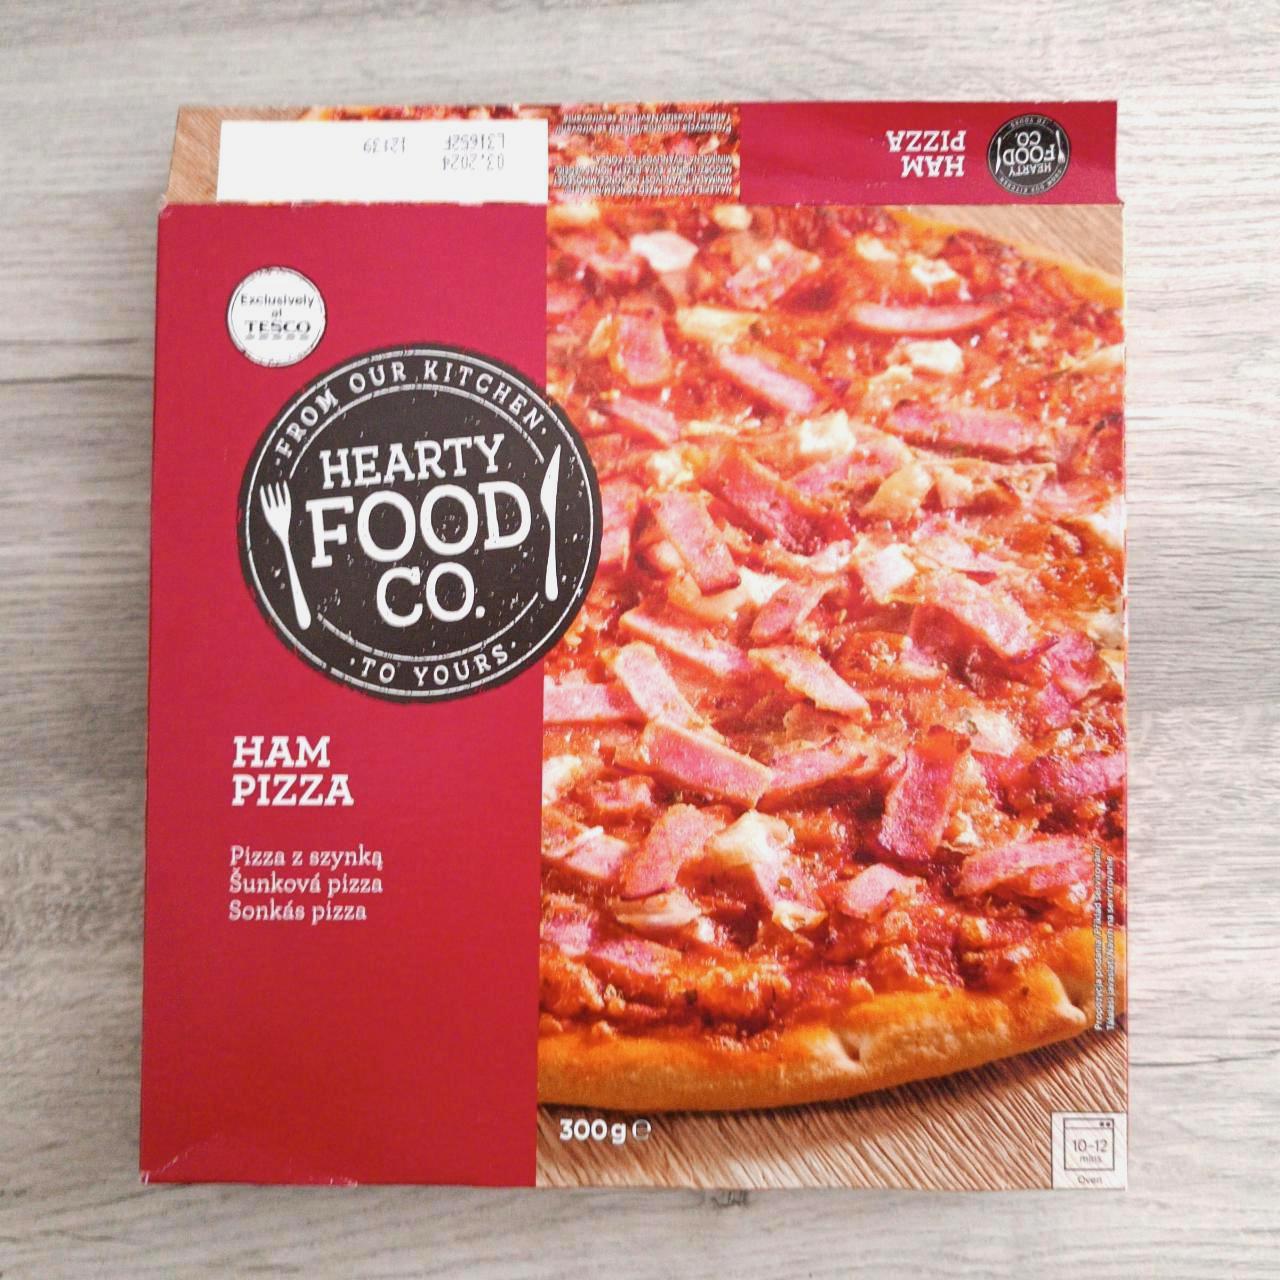 Képek - Ham pizza Hearty food Co.